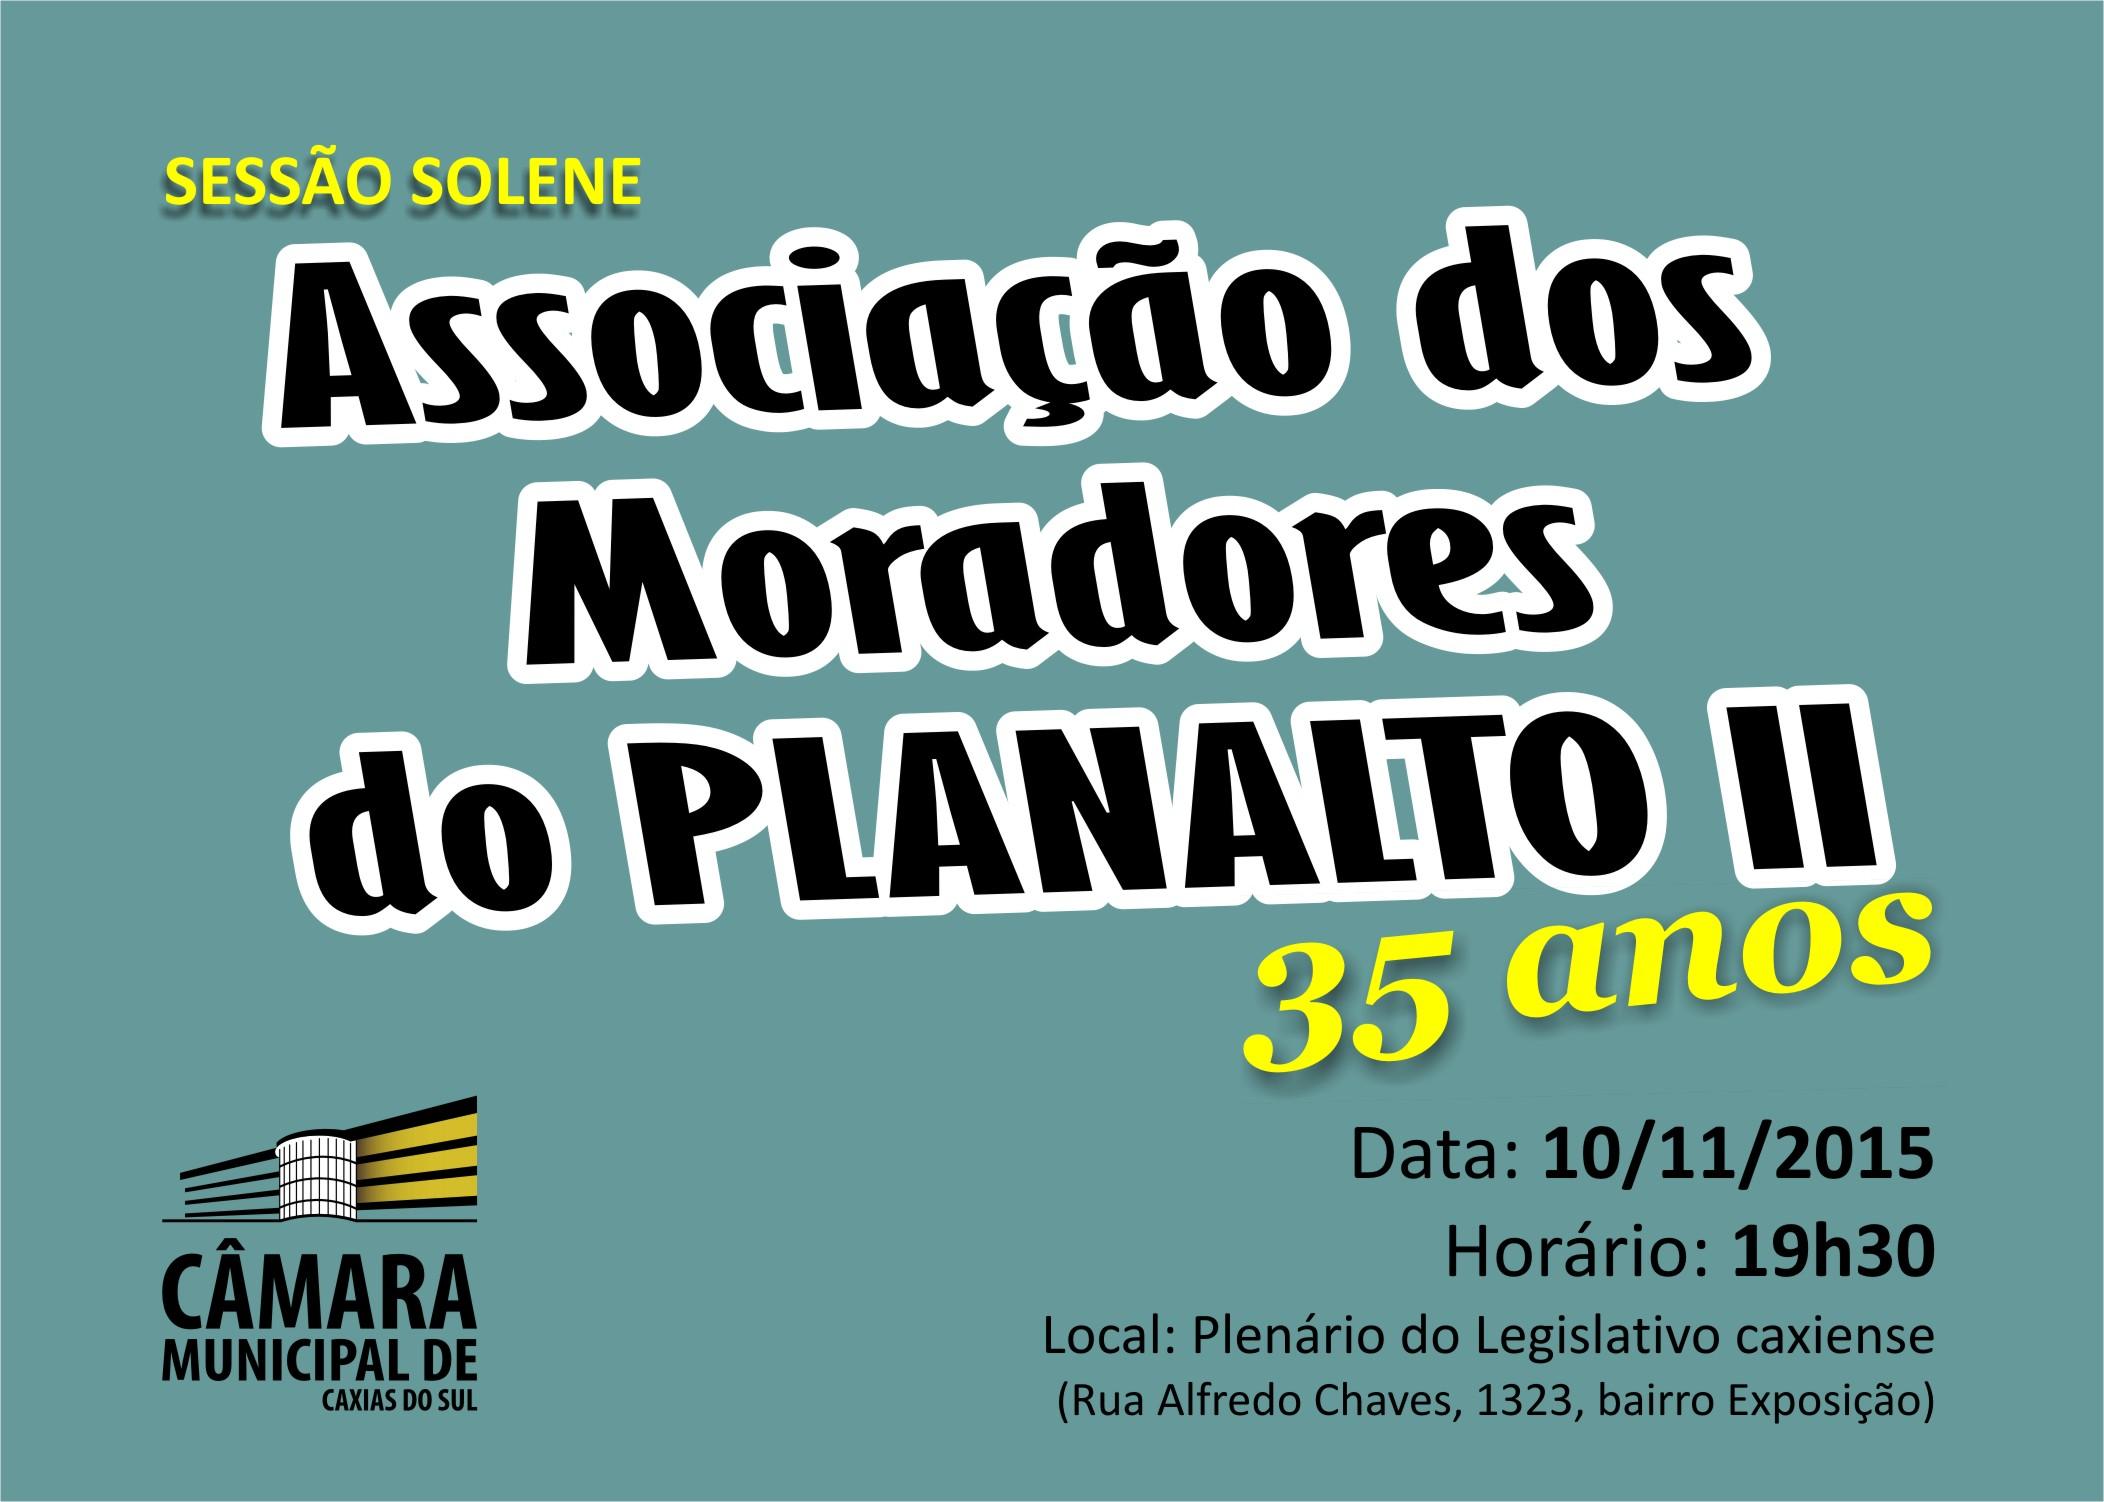 Amob Planalto II recebe homenagem do Legislativo caxiense nesta terça-feira (10/11)